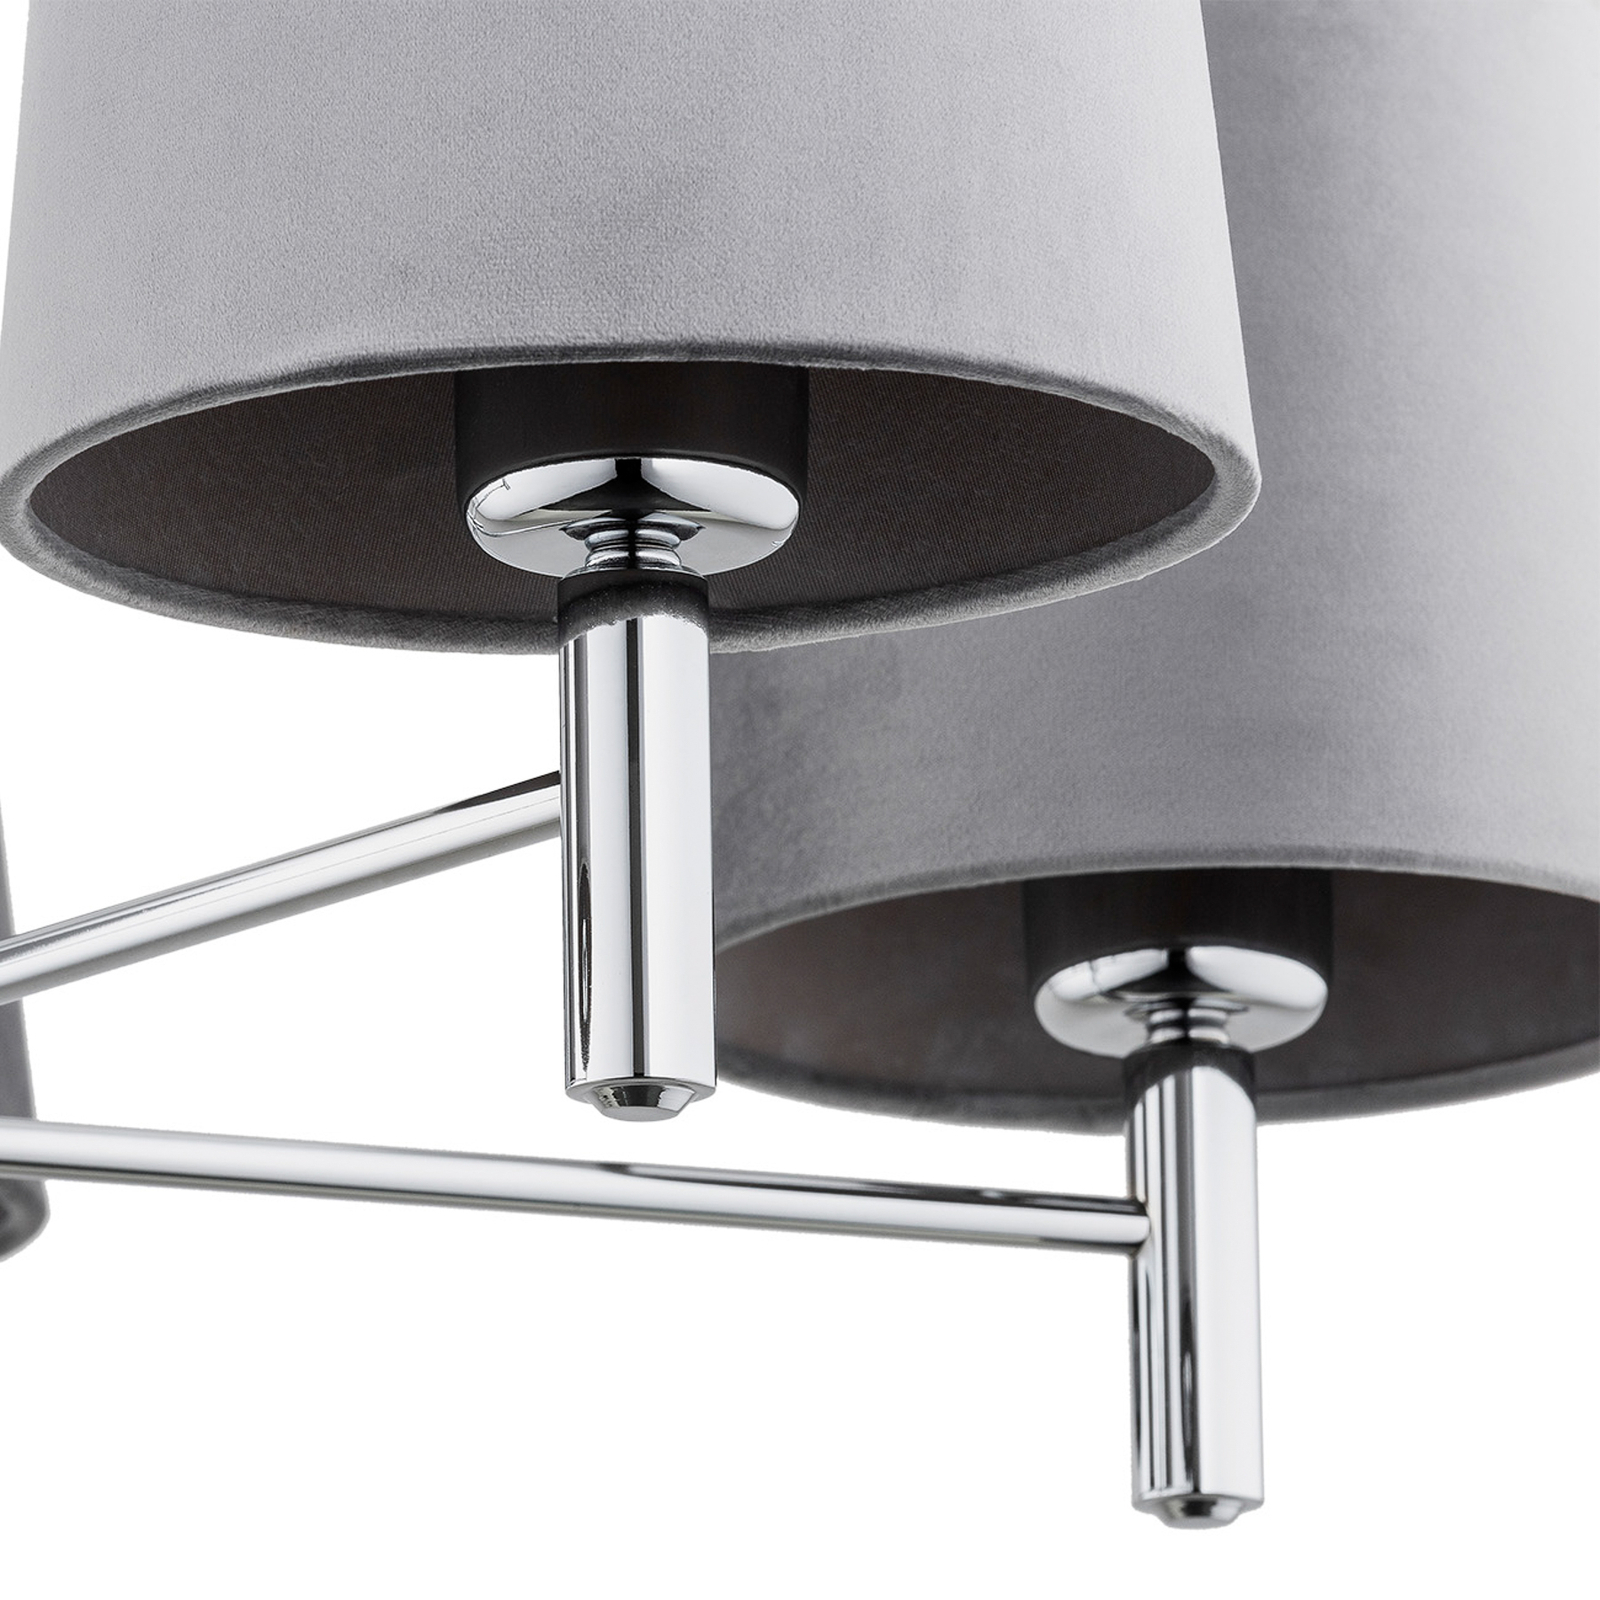 Hanglamp Bono, 5-lamps, chroom/grijs